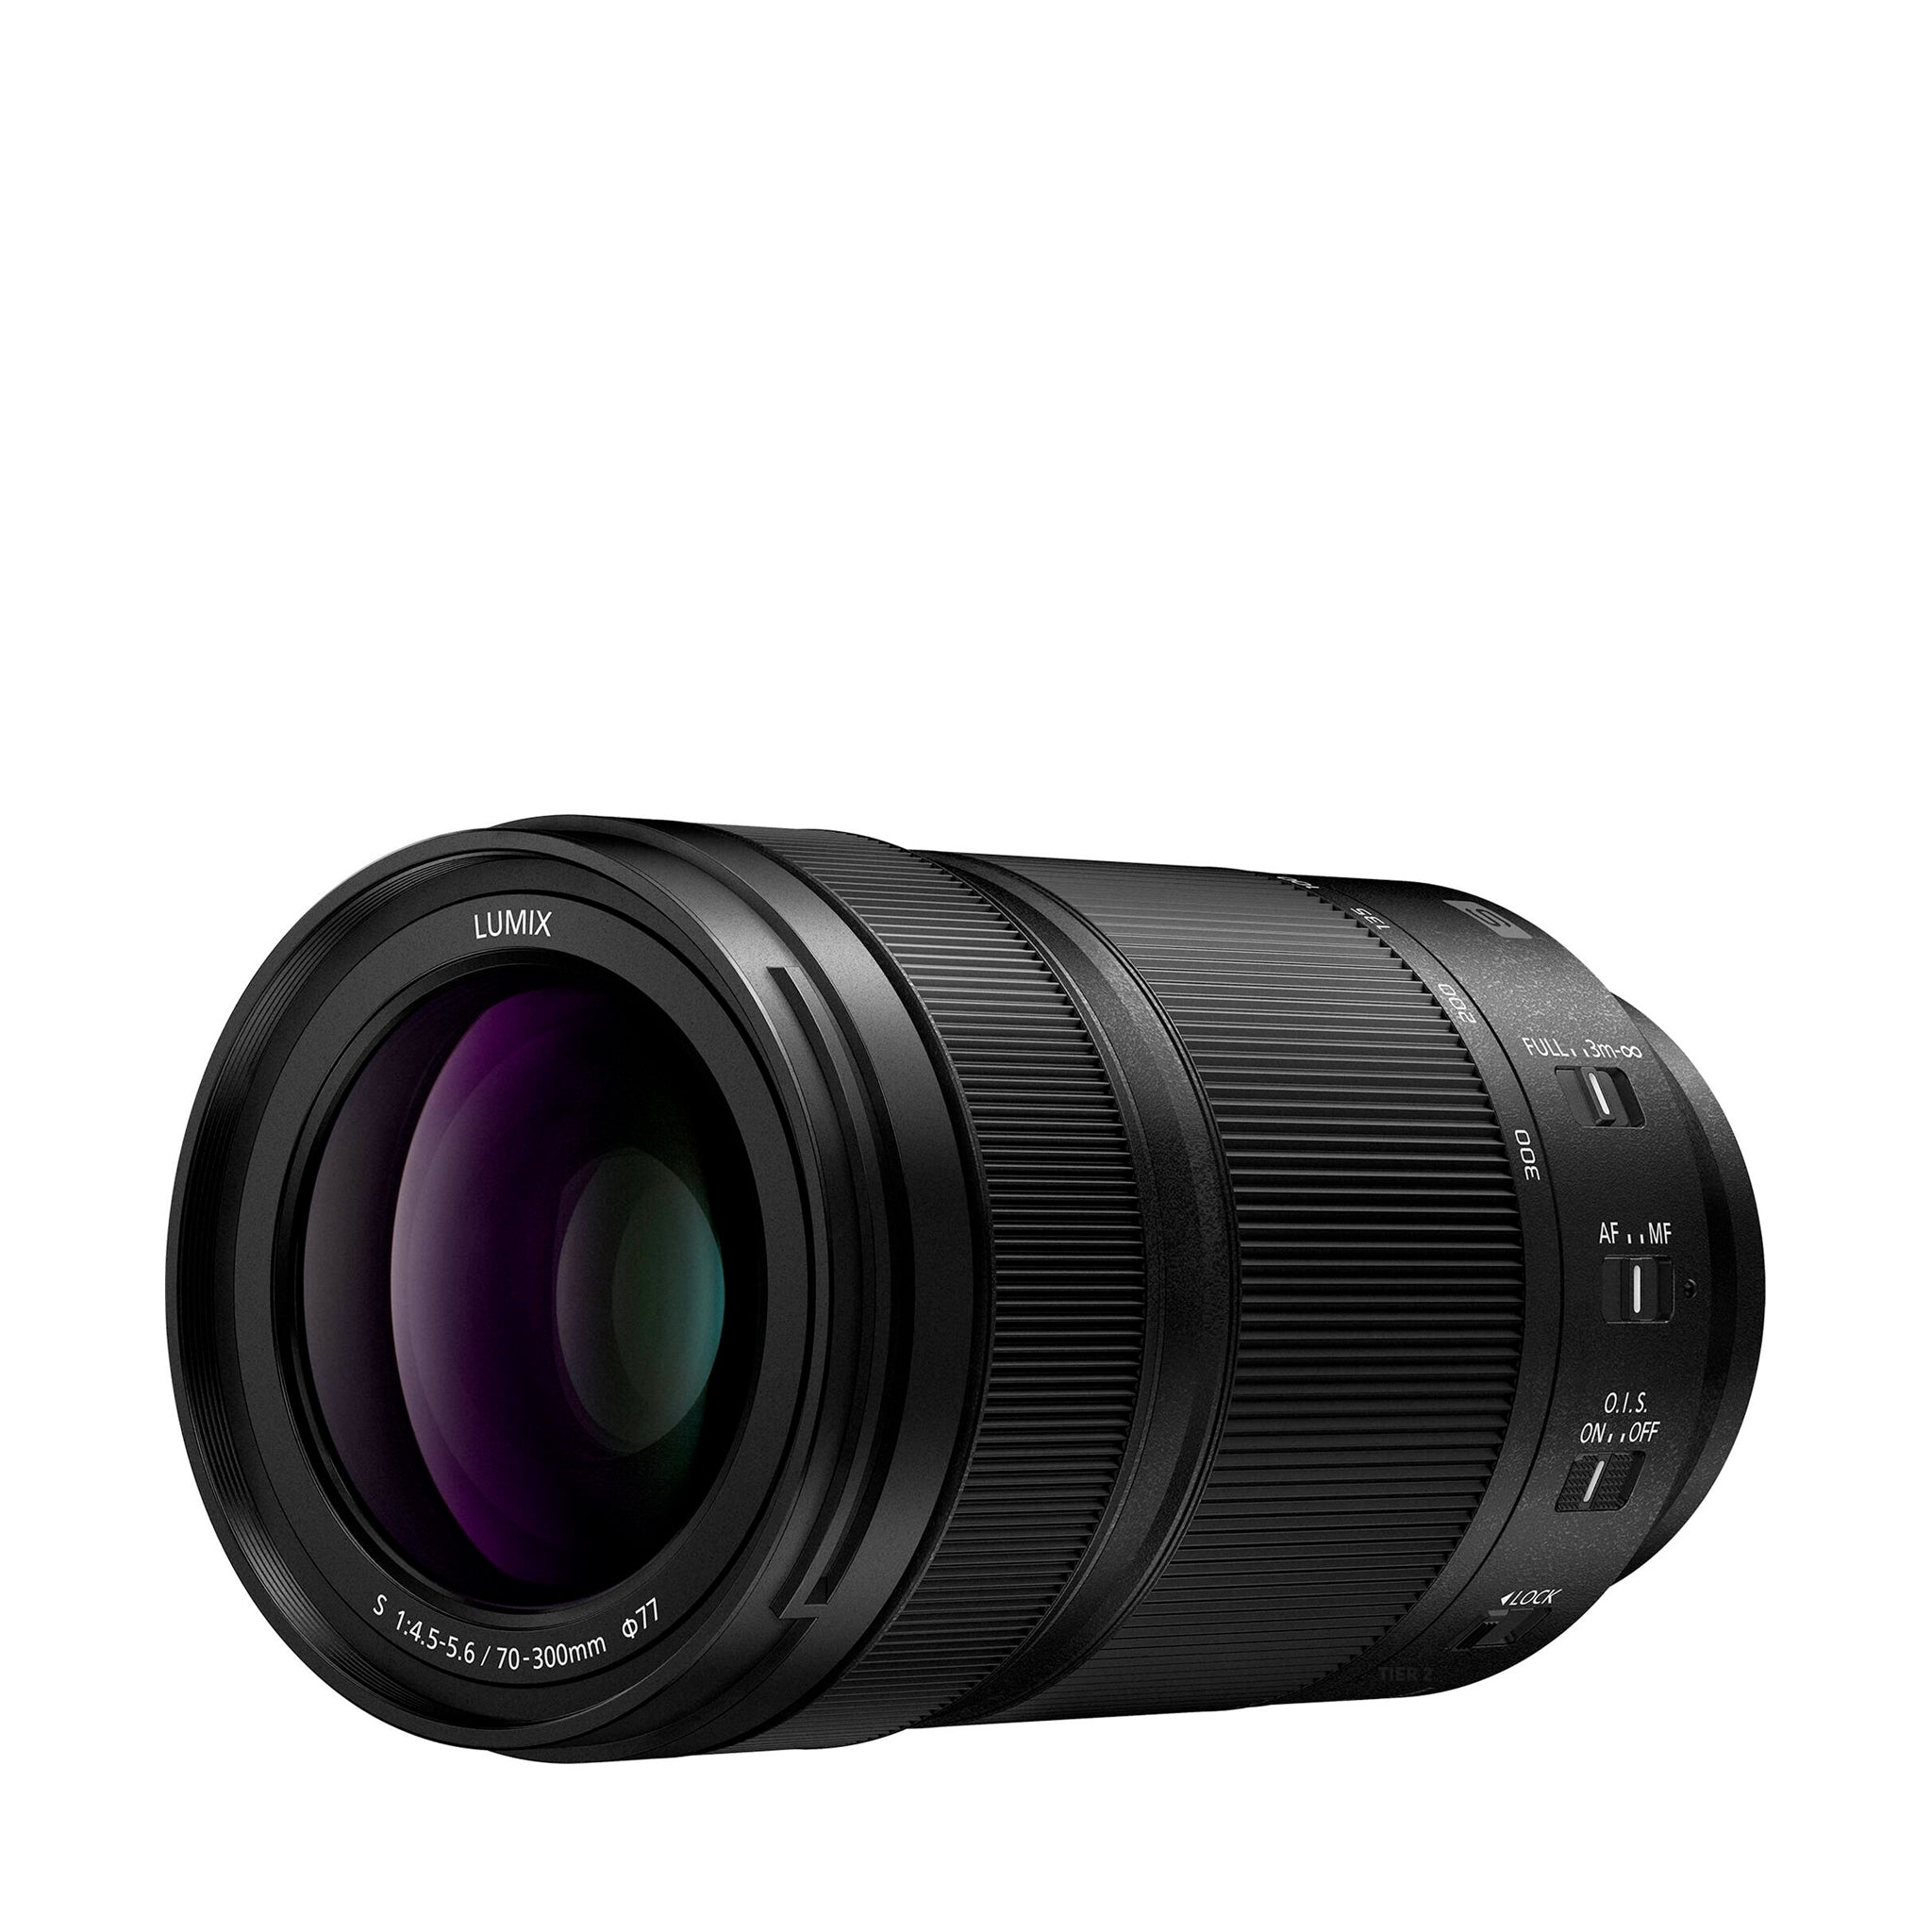 S Series 70-300mm F4.5-5.6 L Mount Lens